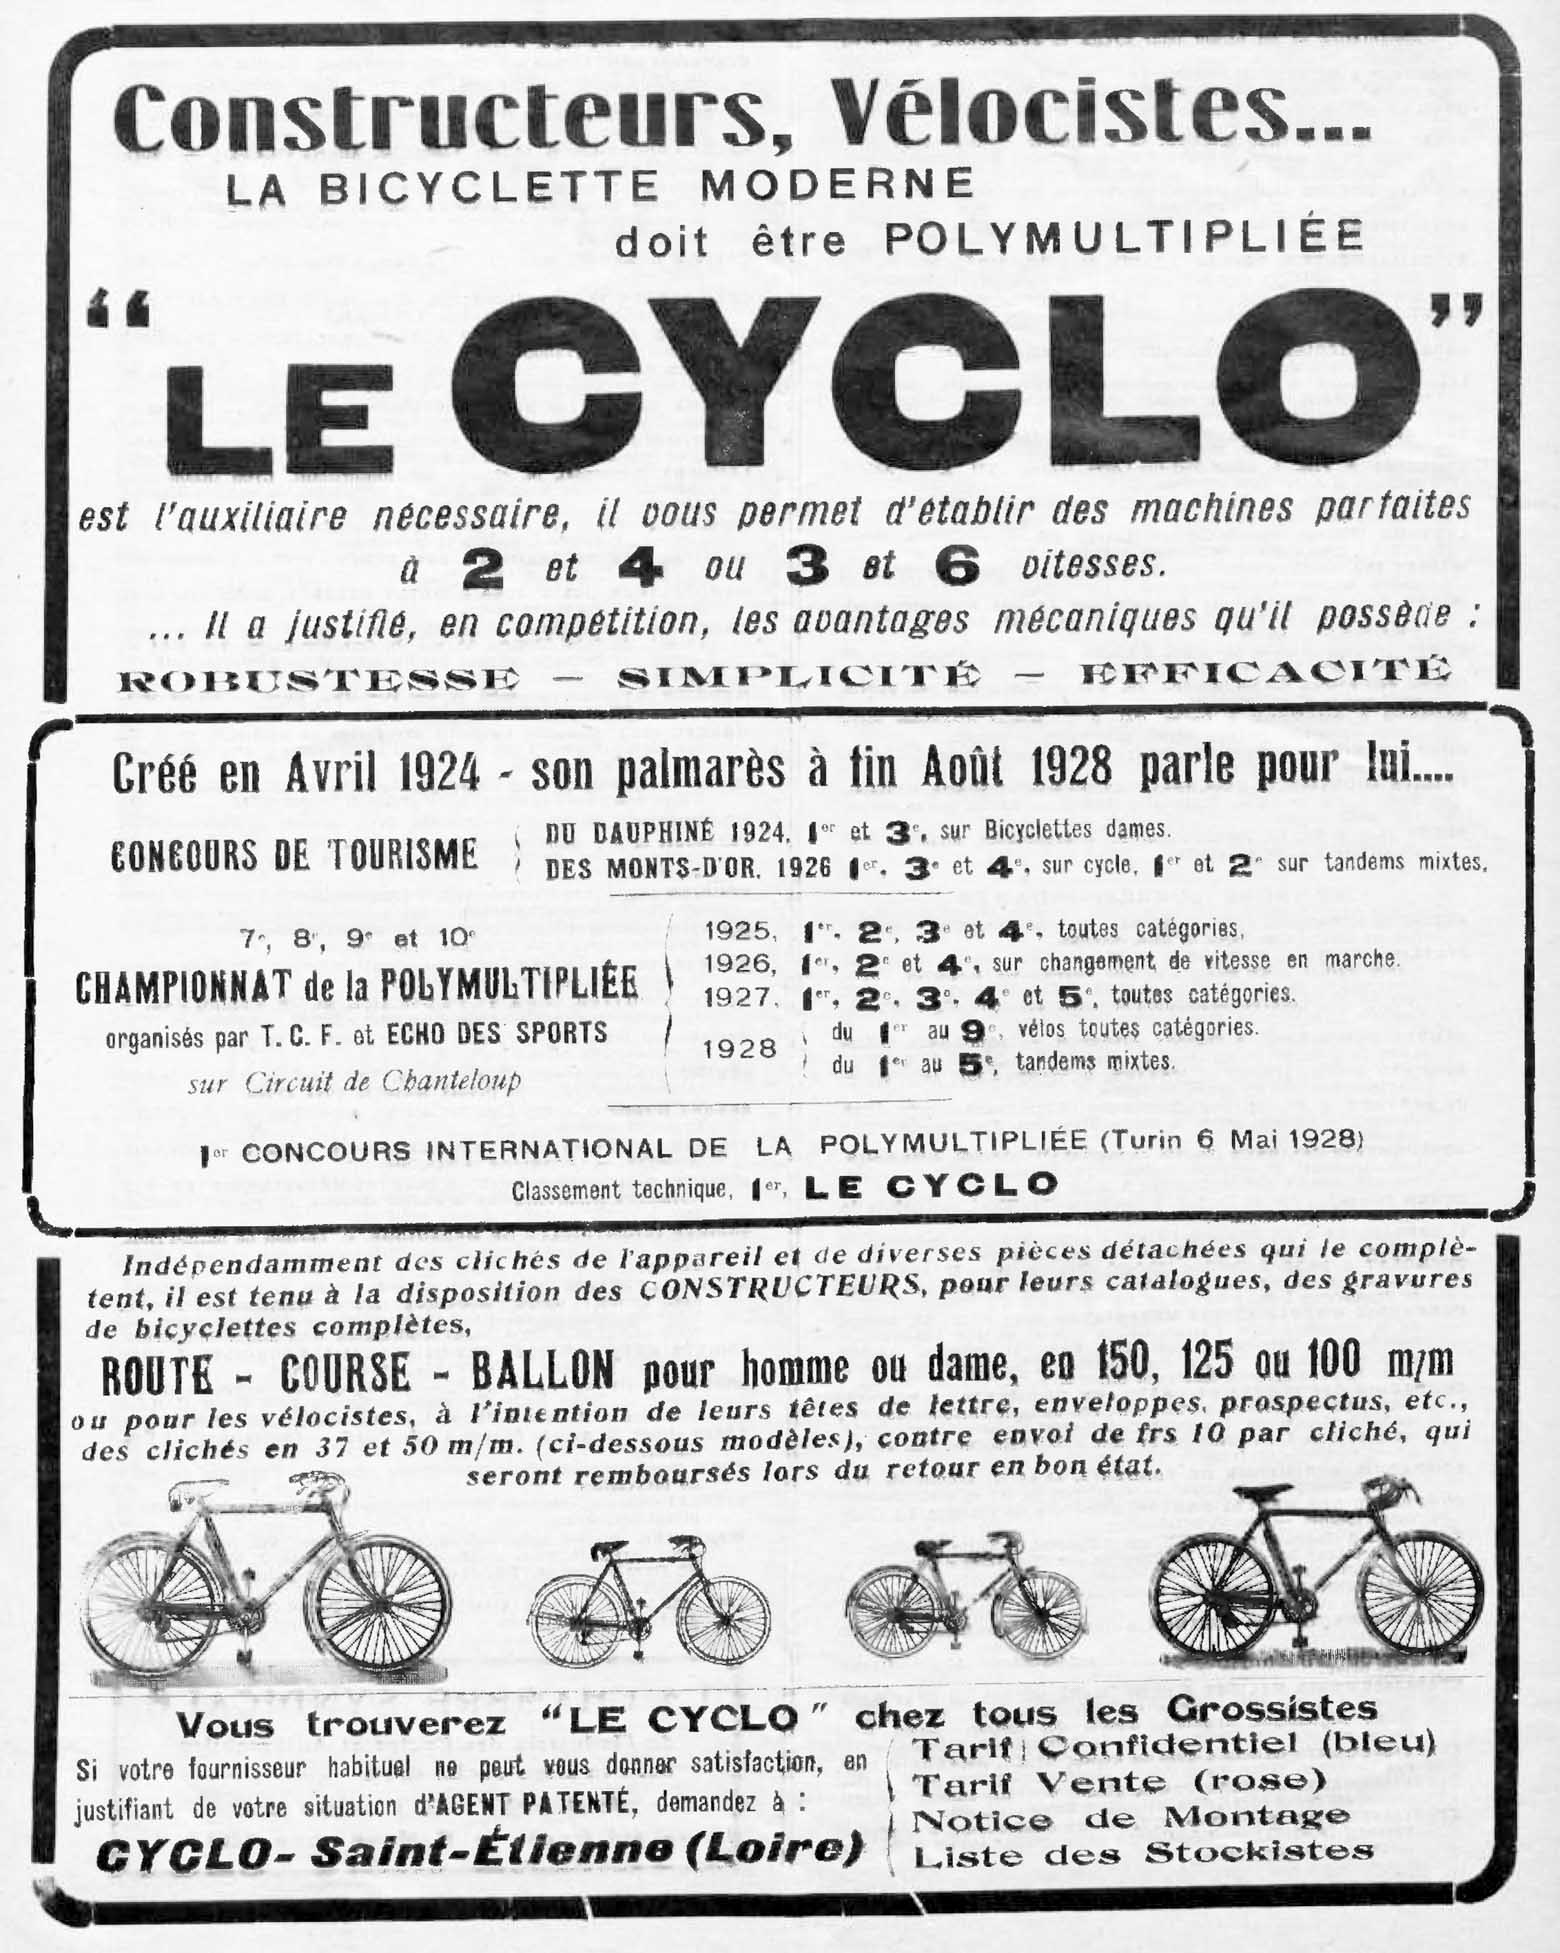 L'Industrie des Cycles et Automobiles September 1928 - Cyclo advert main image